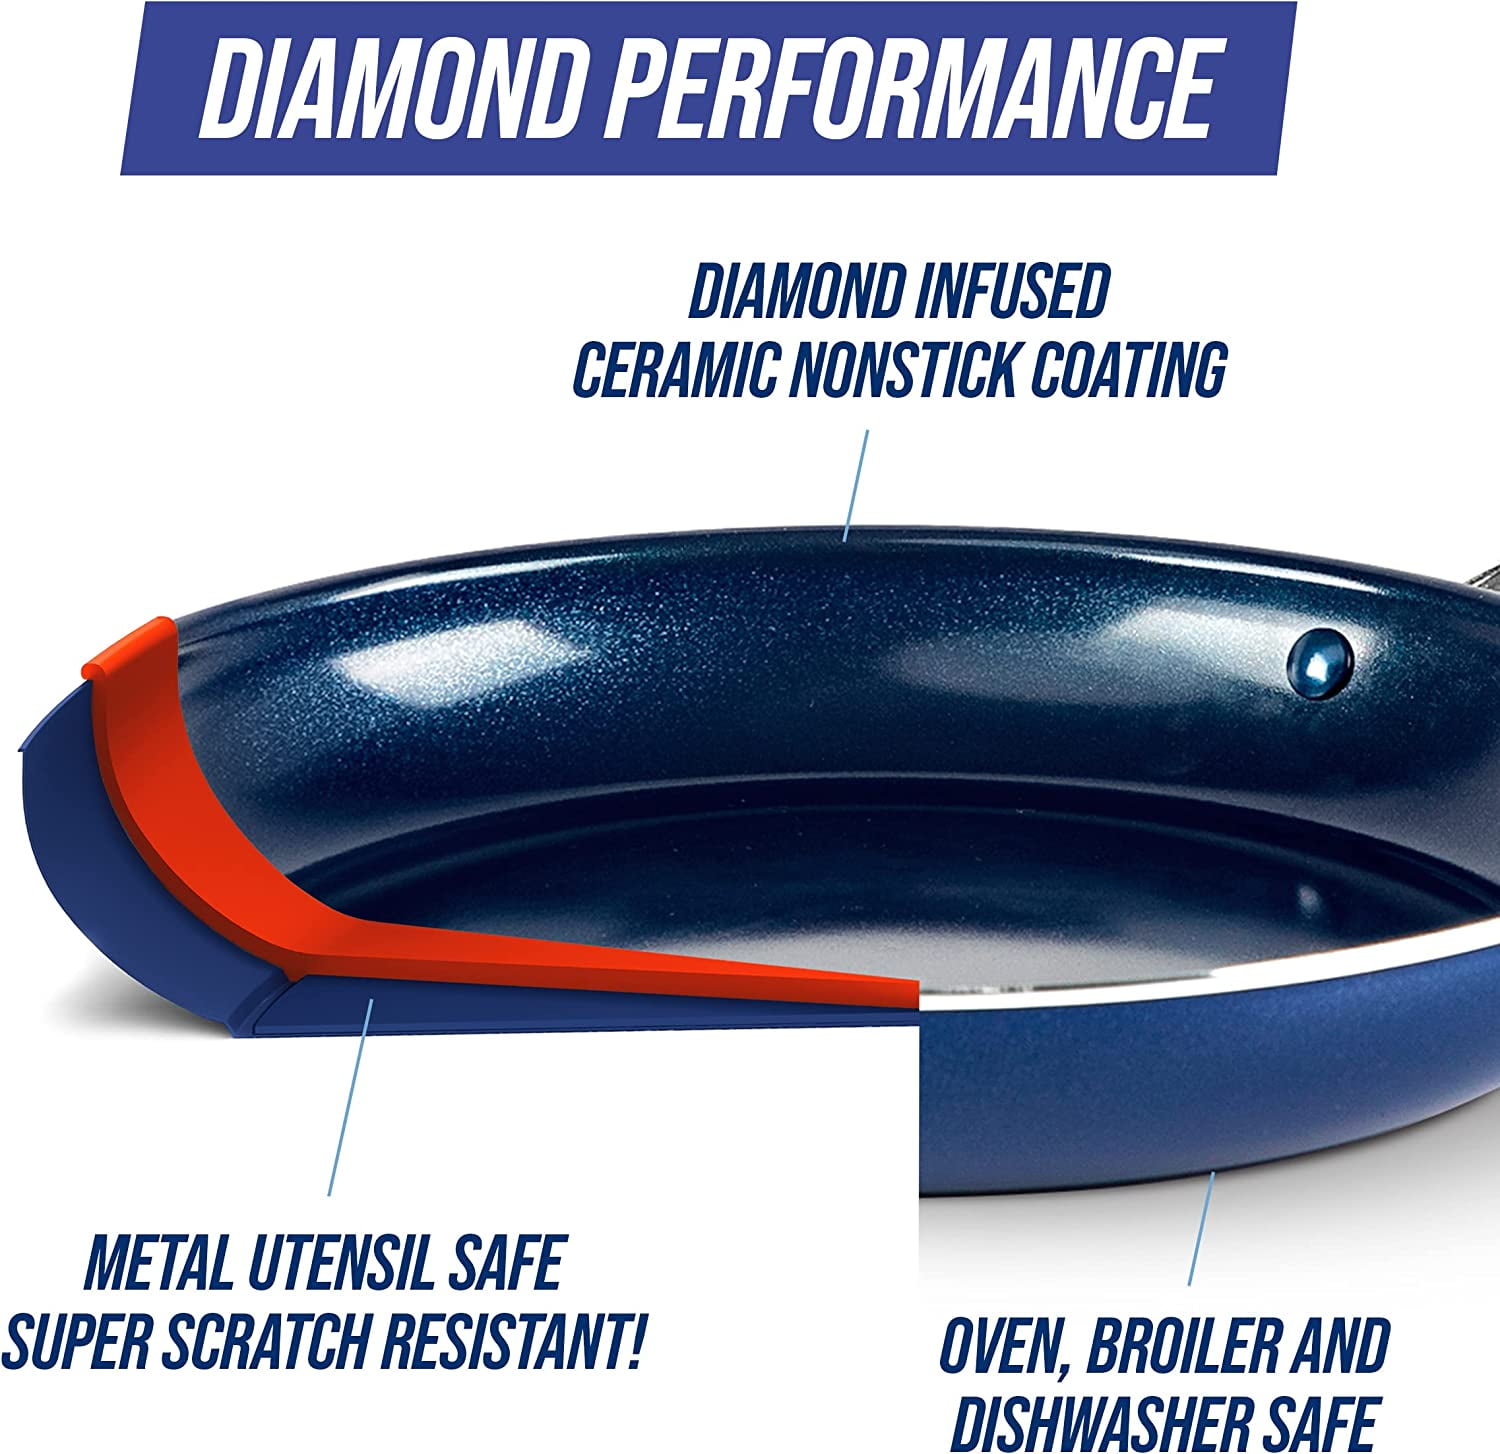 Blue Diamond Hard Anodized Nonstick 10 Piece Cookware Set CC006153-001